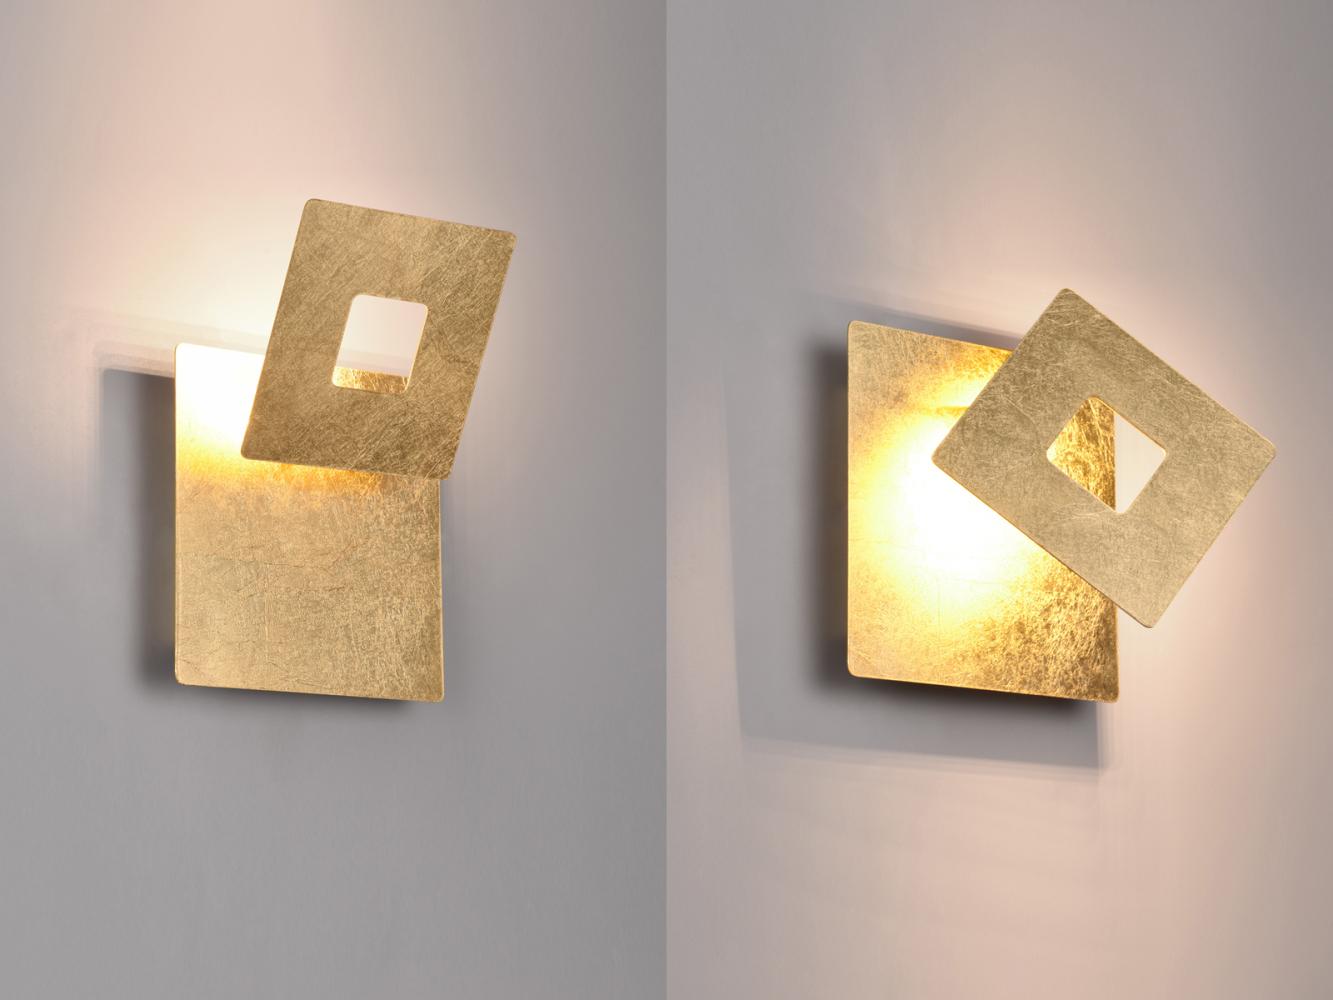 2-er Set LED Wandleuchten mit indirekter Beleuchtung, Gold Höhe 18cm Bild 1